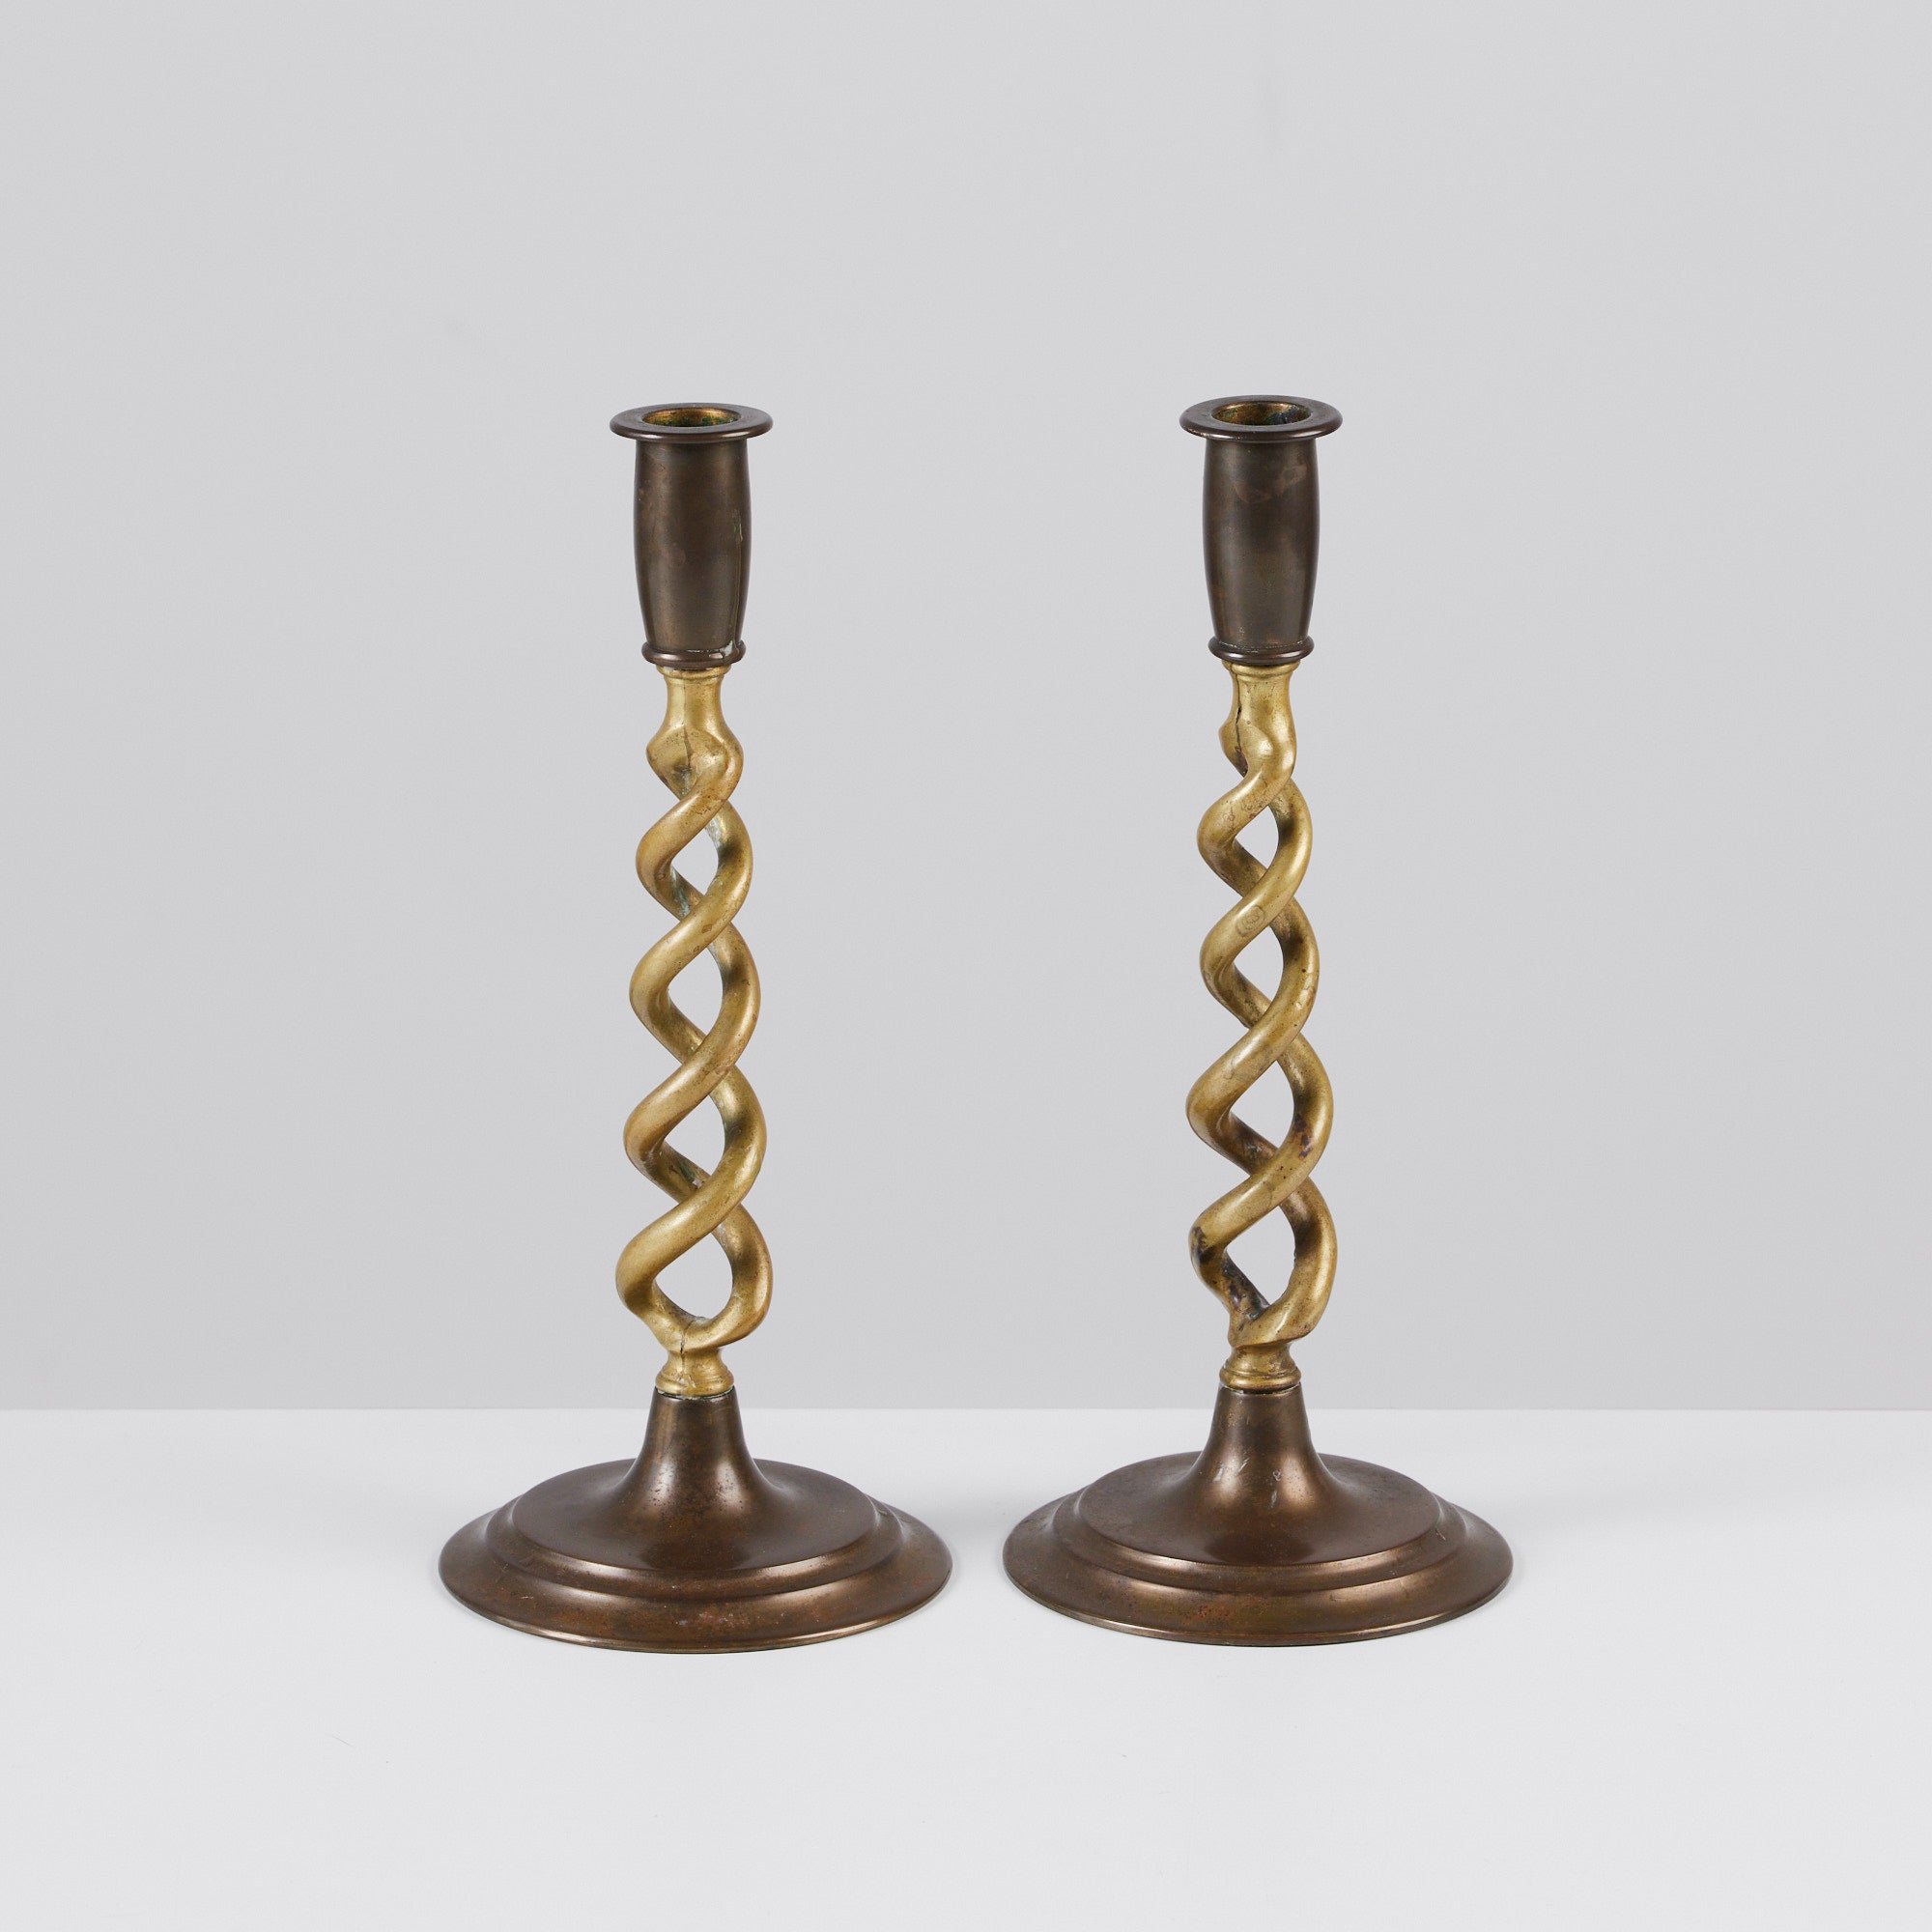 Pair of Brass Barley Twist Candlesticks by Peerage